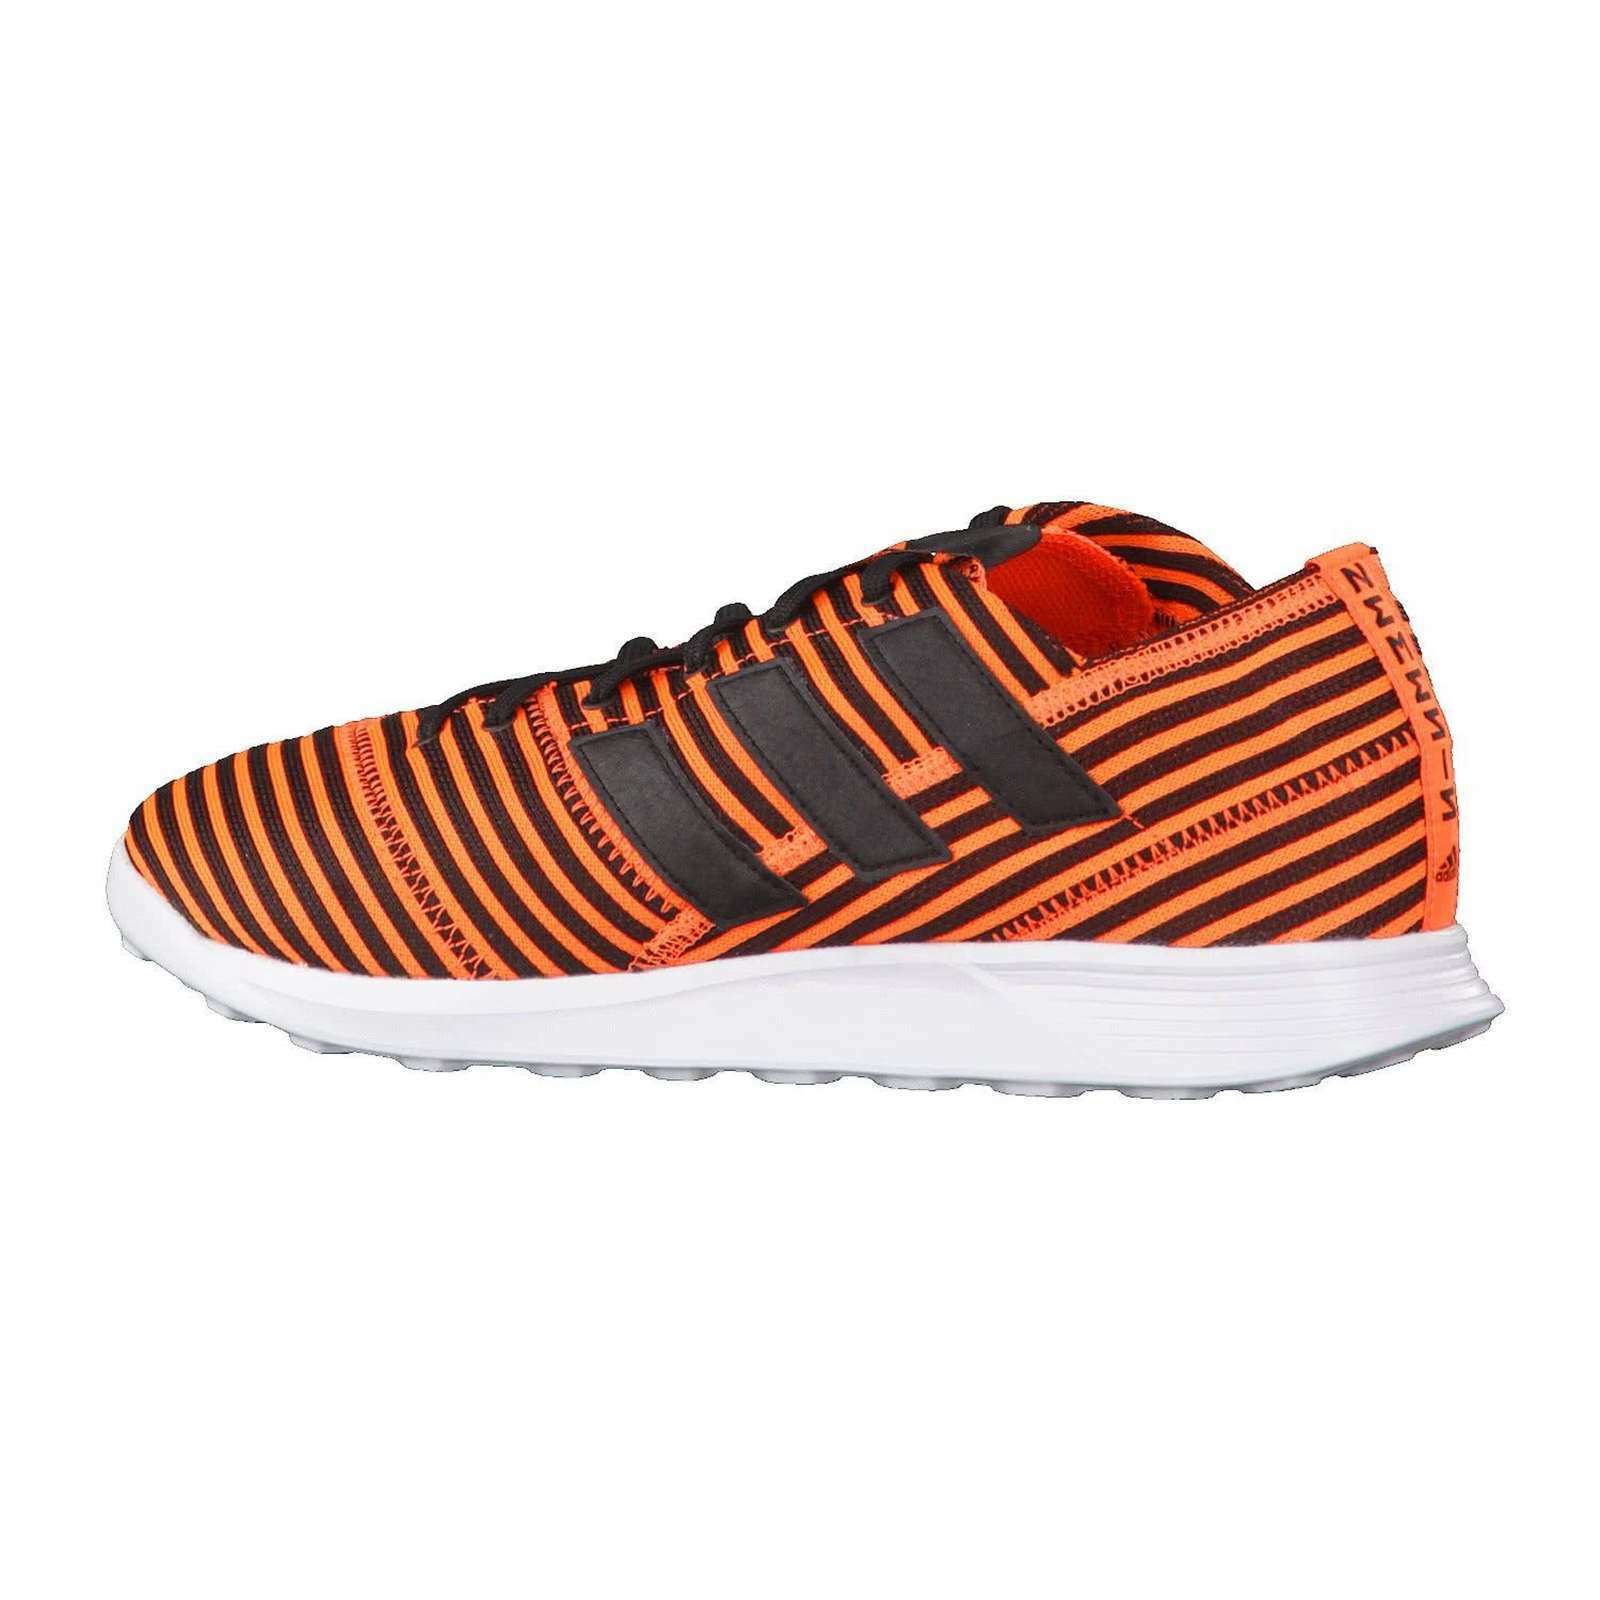 Adidas Nemeziz Tr Orange/Black Textile Trainers Shoes BY2468 Smfashiontrends